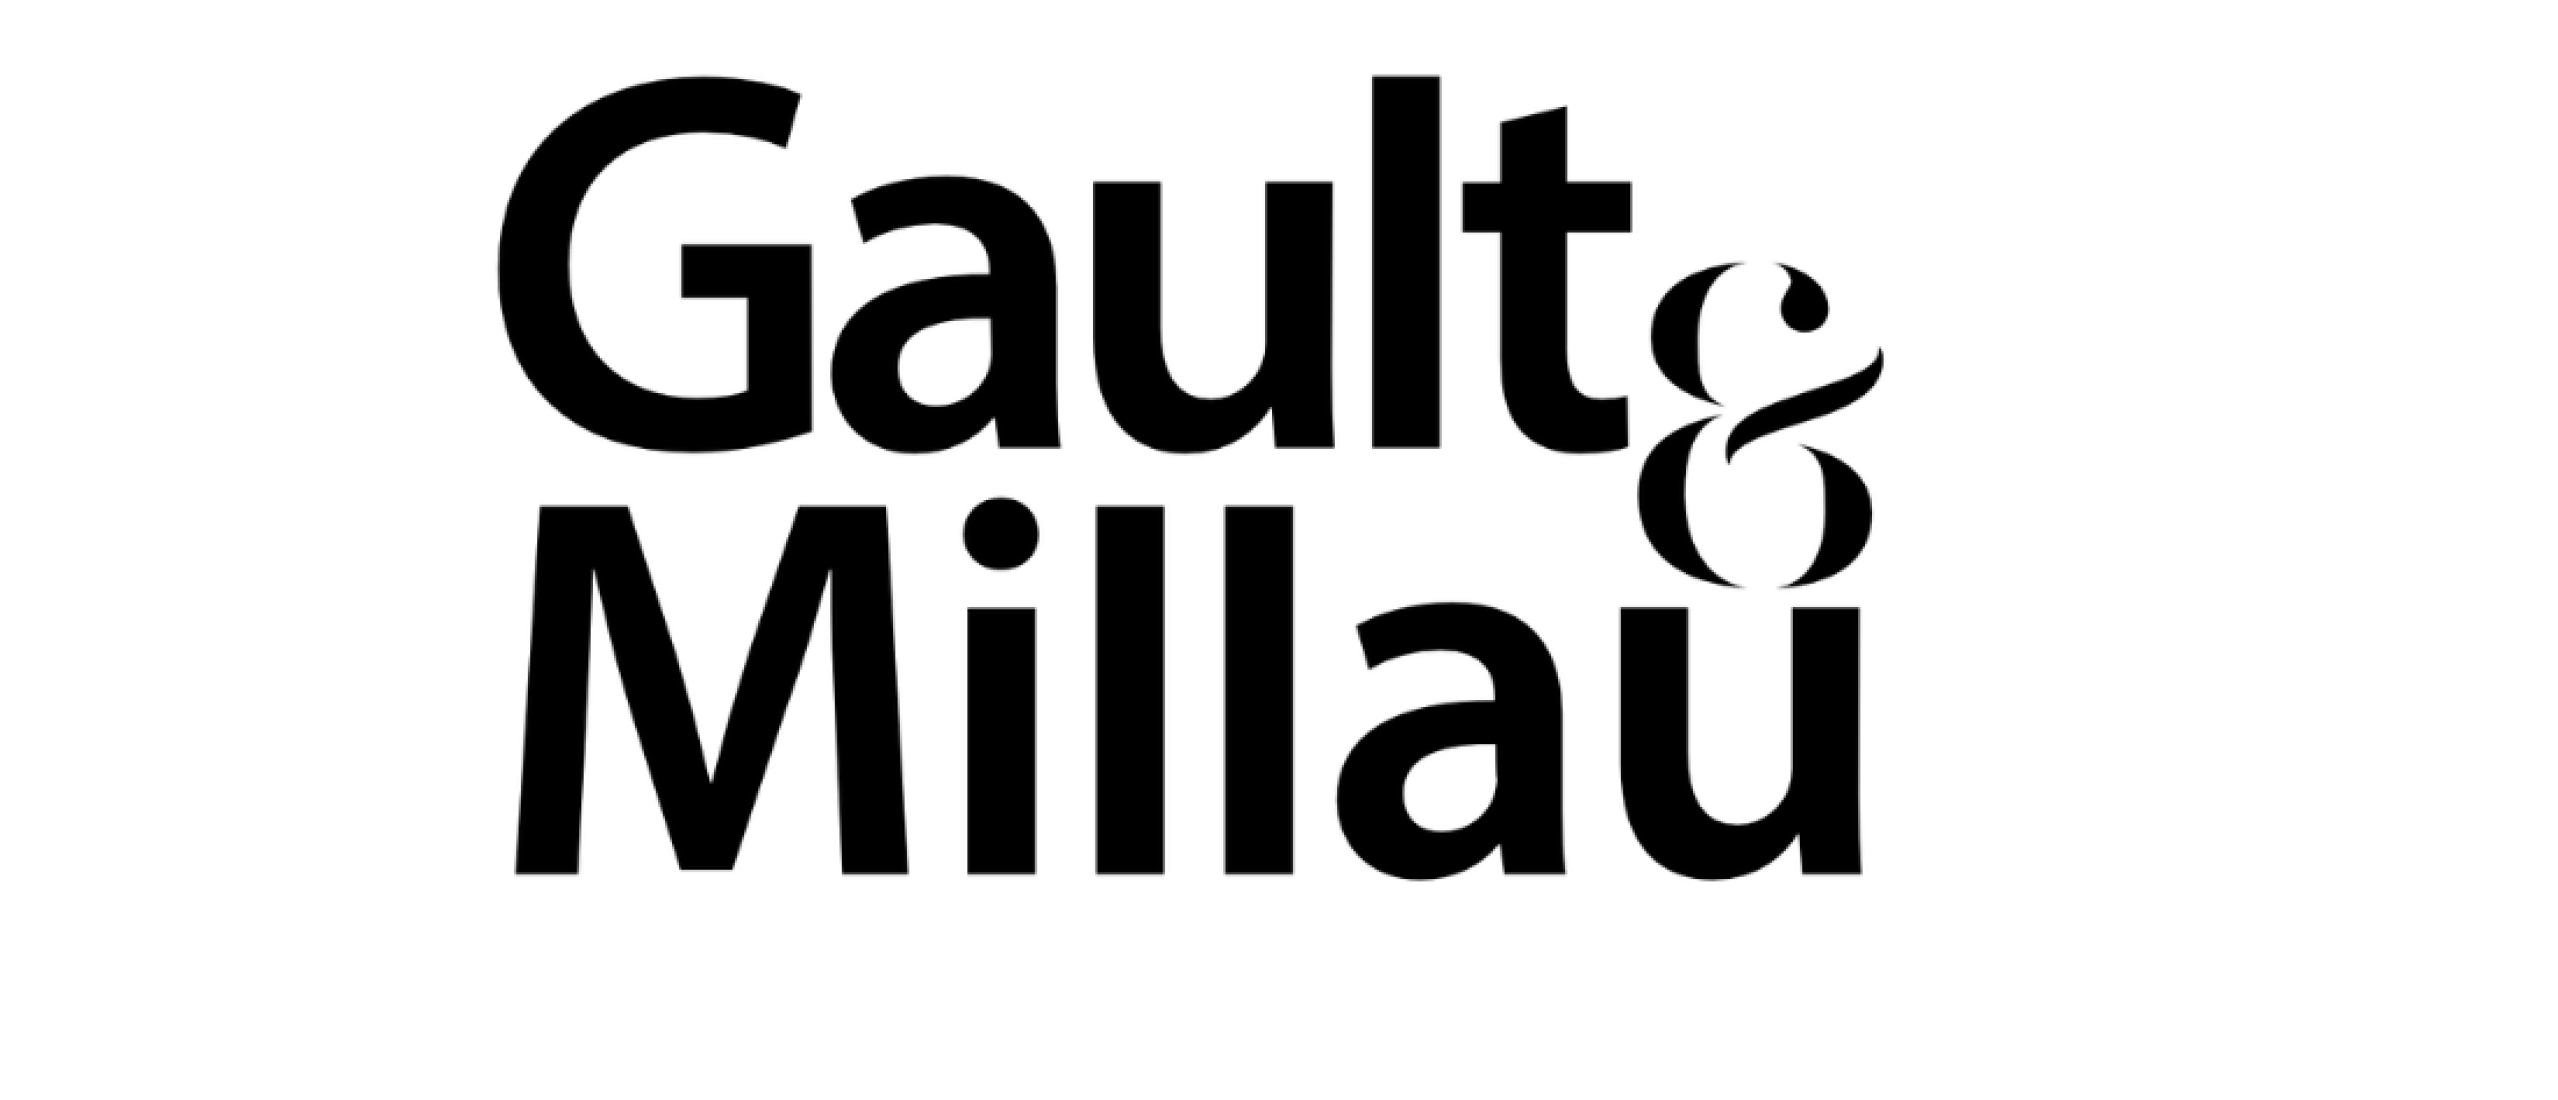 Gault&Millau gidslancering & award uitreiking 2023